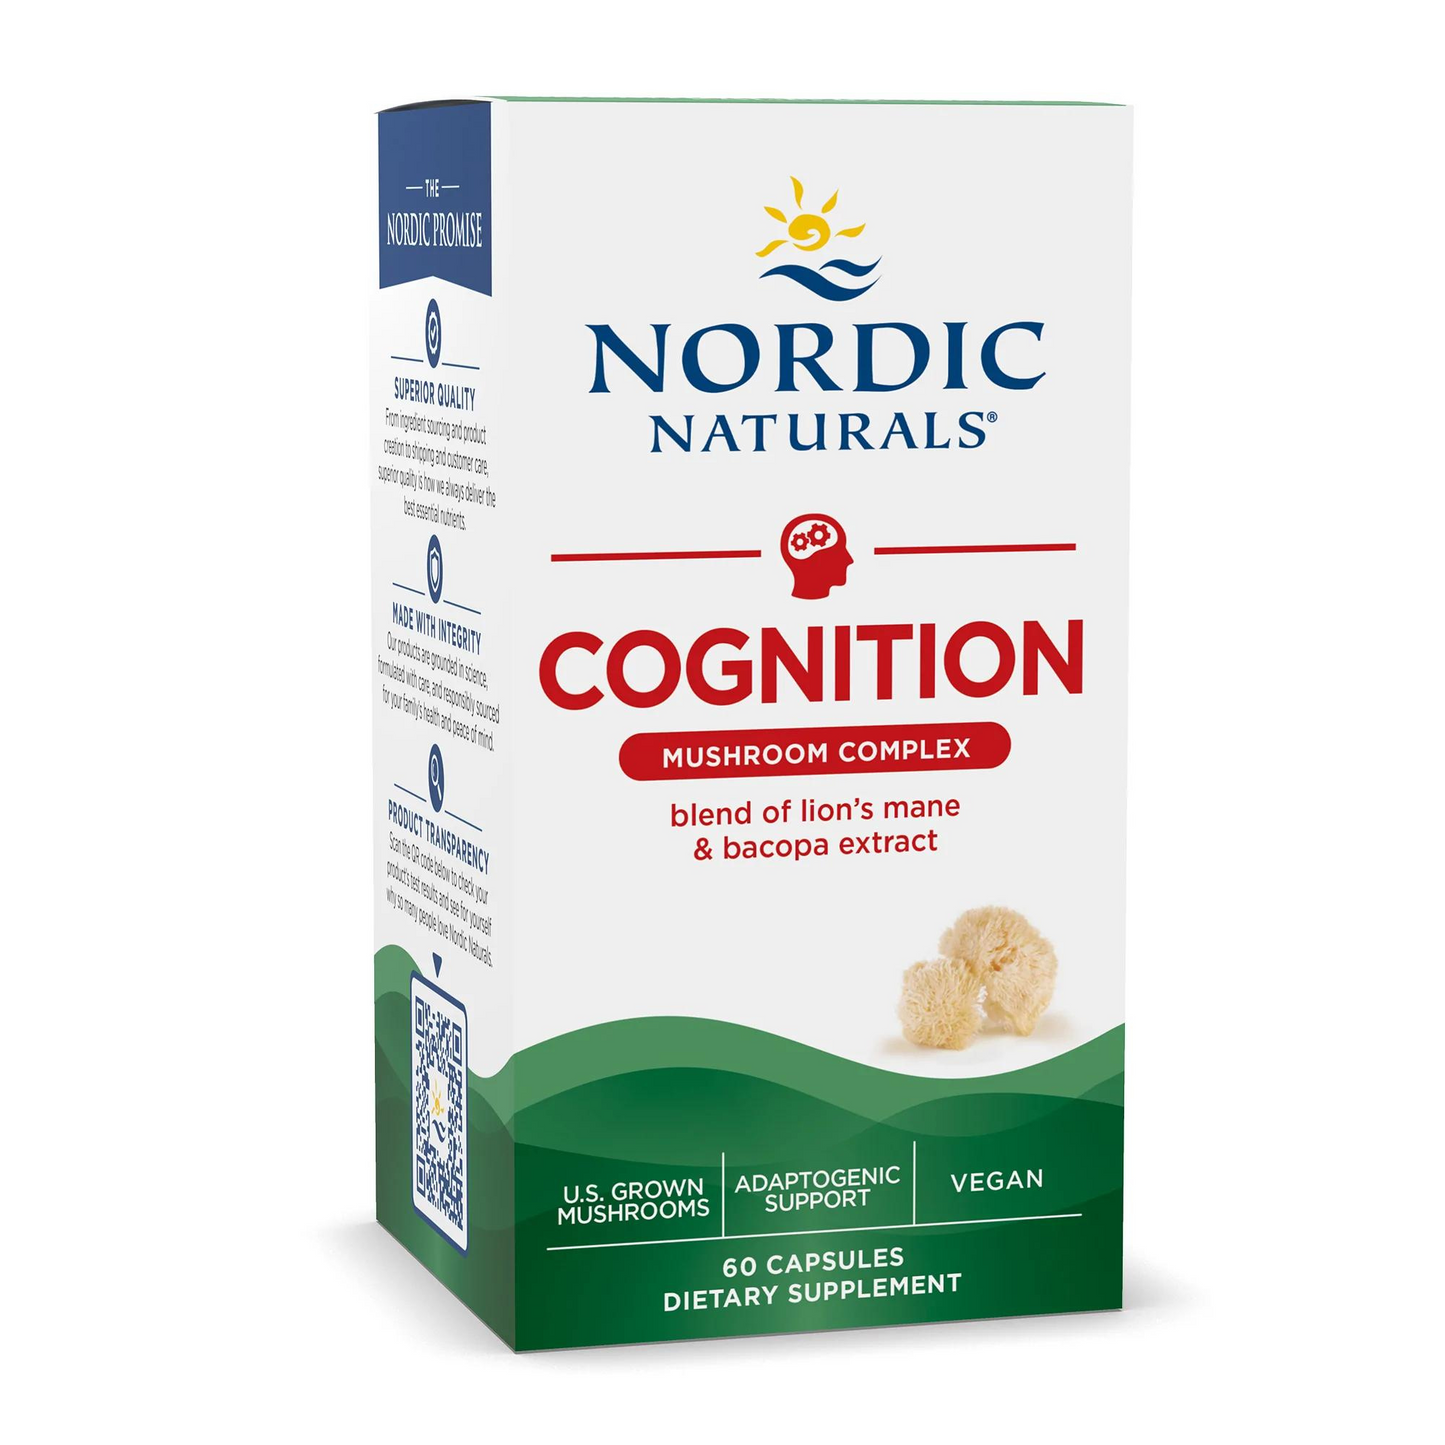 Primary Image of Nordic Naturals Cognition Mushroom Complex Capsules (60 count)